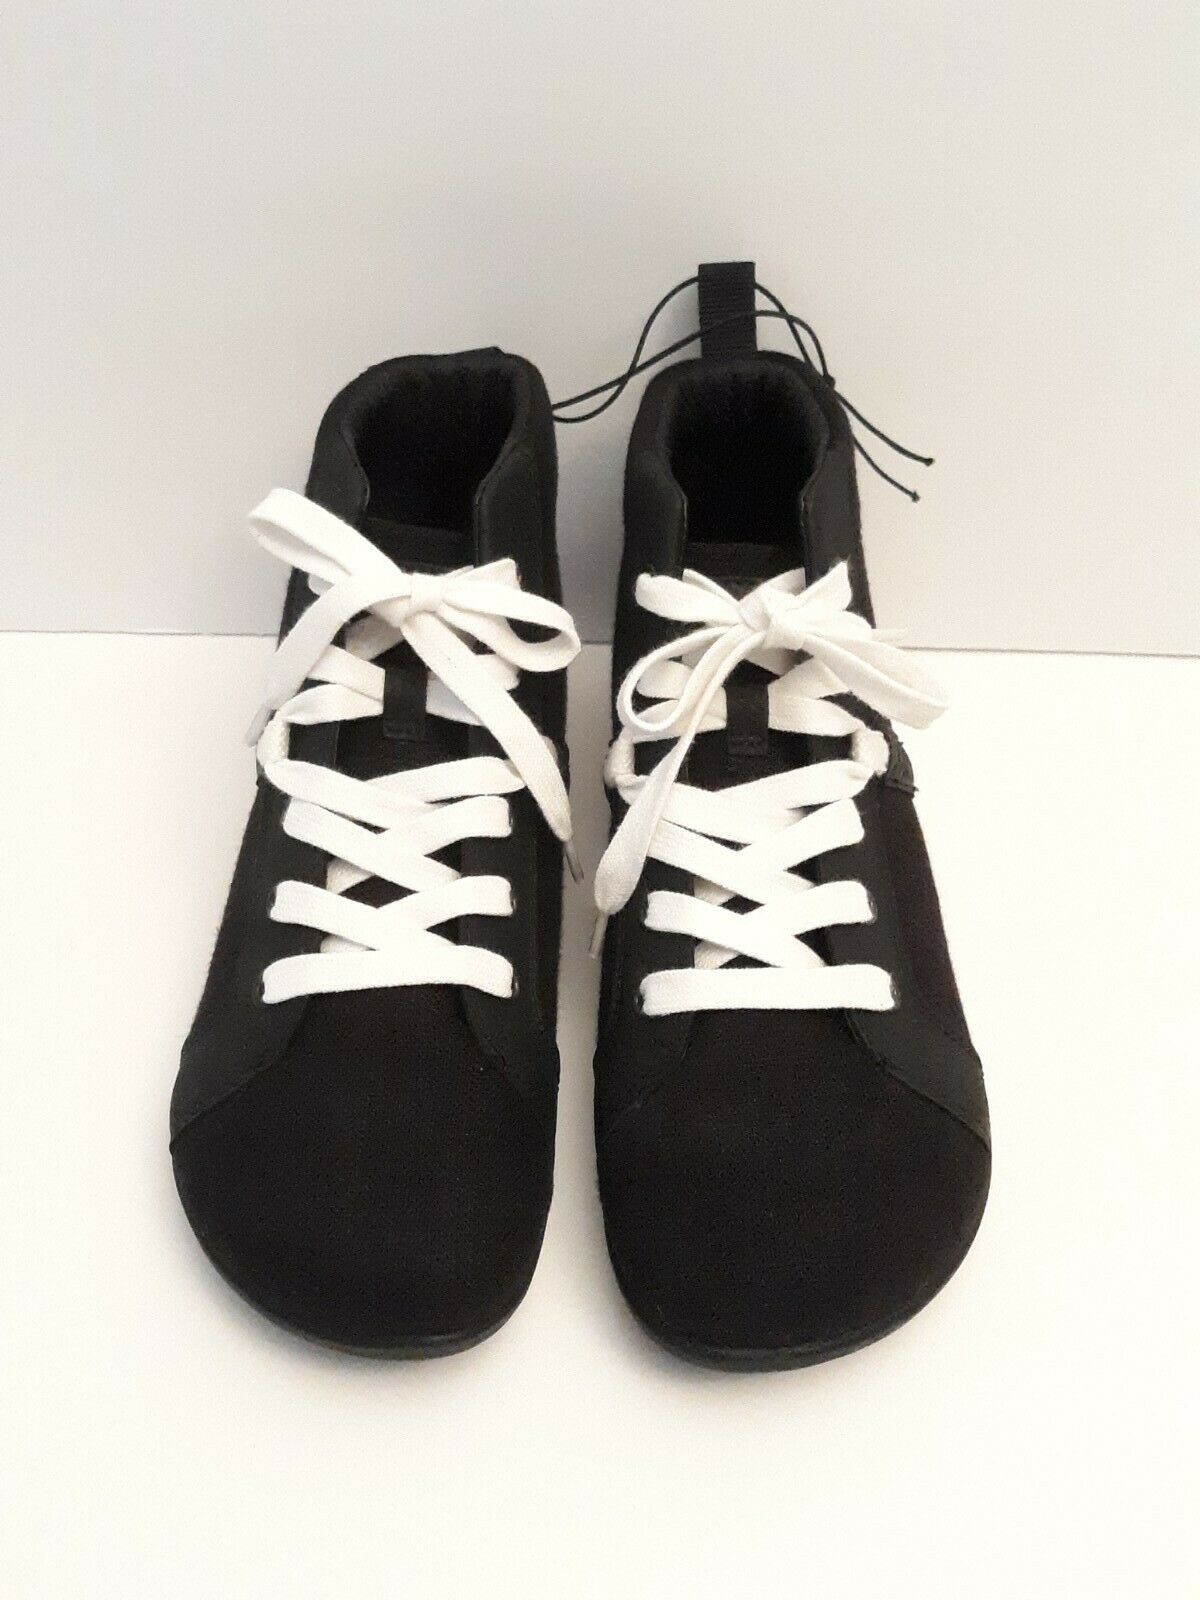 Xero Shoes High-Top Toronto black with white laces women's US 6.5